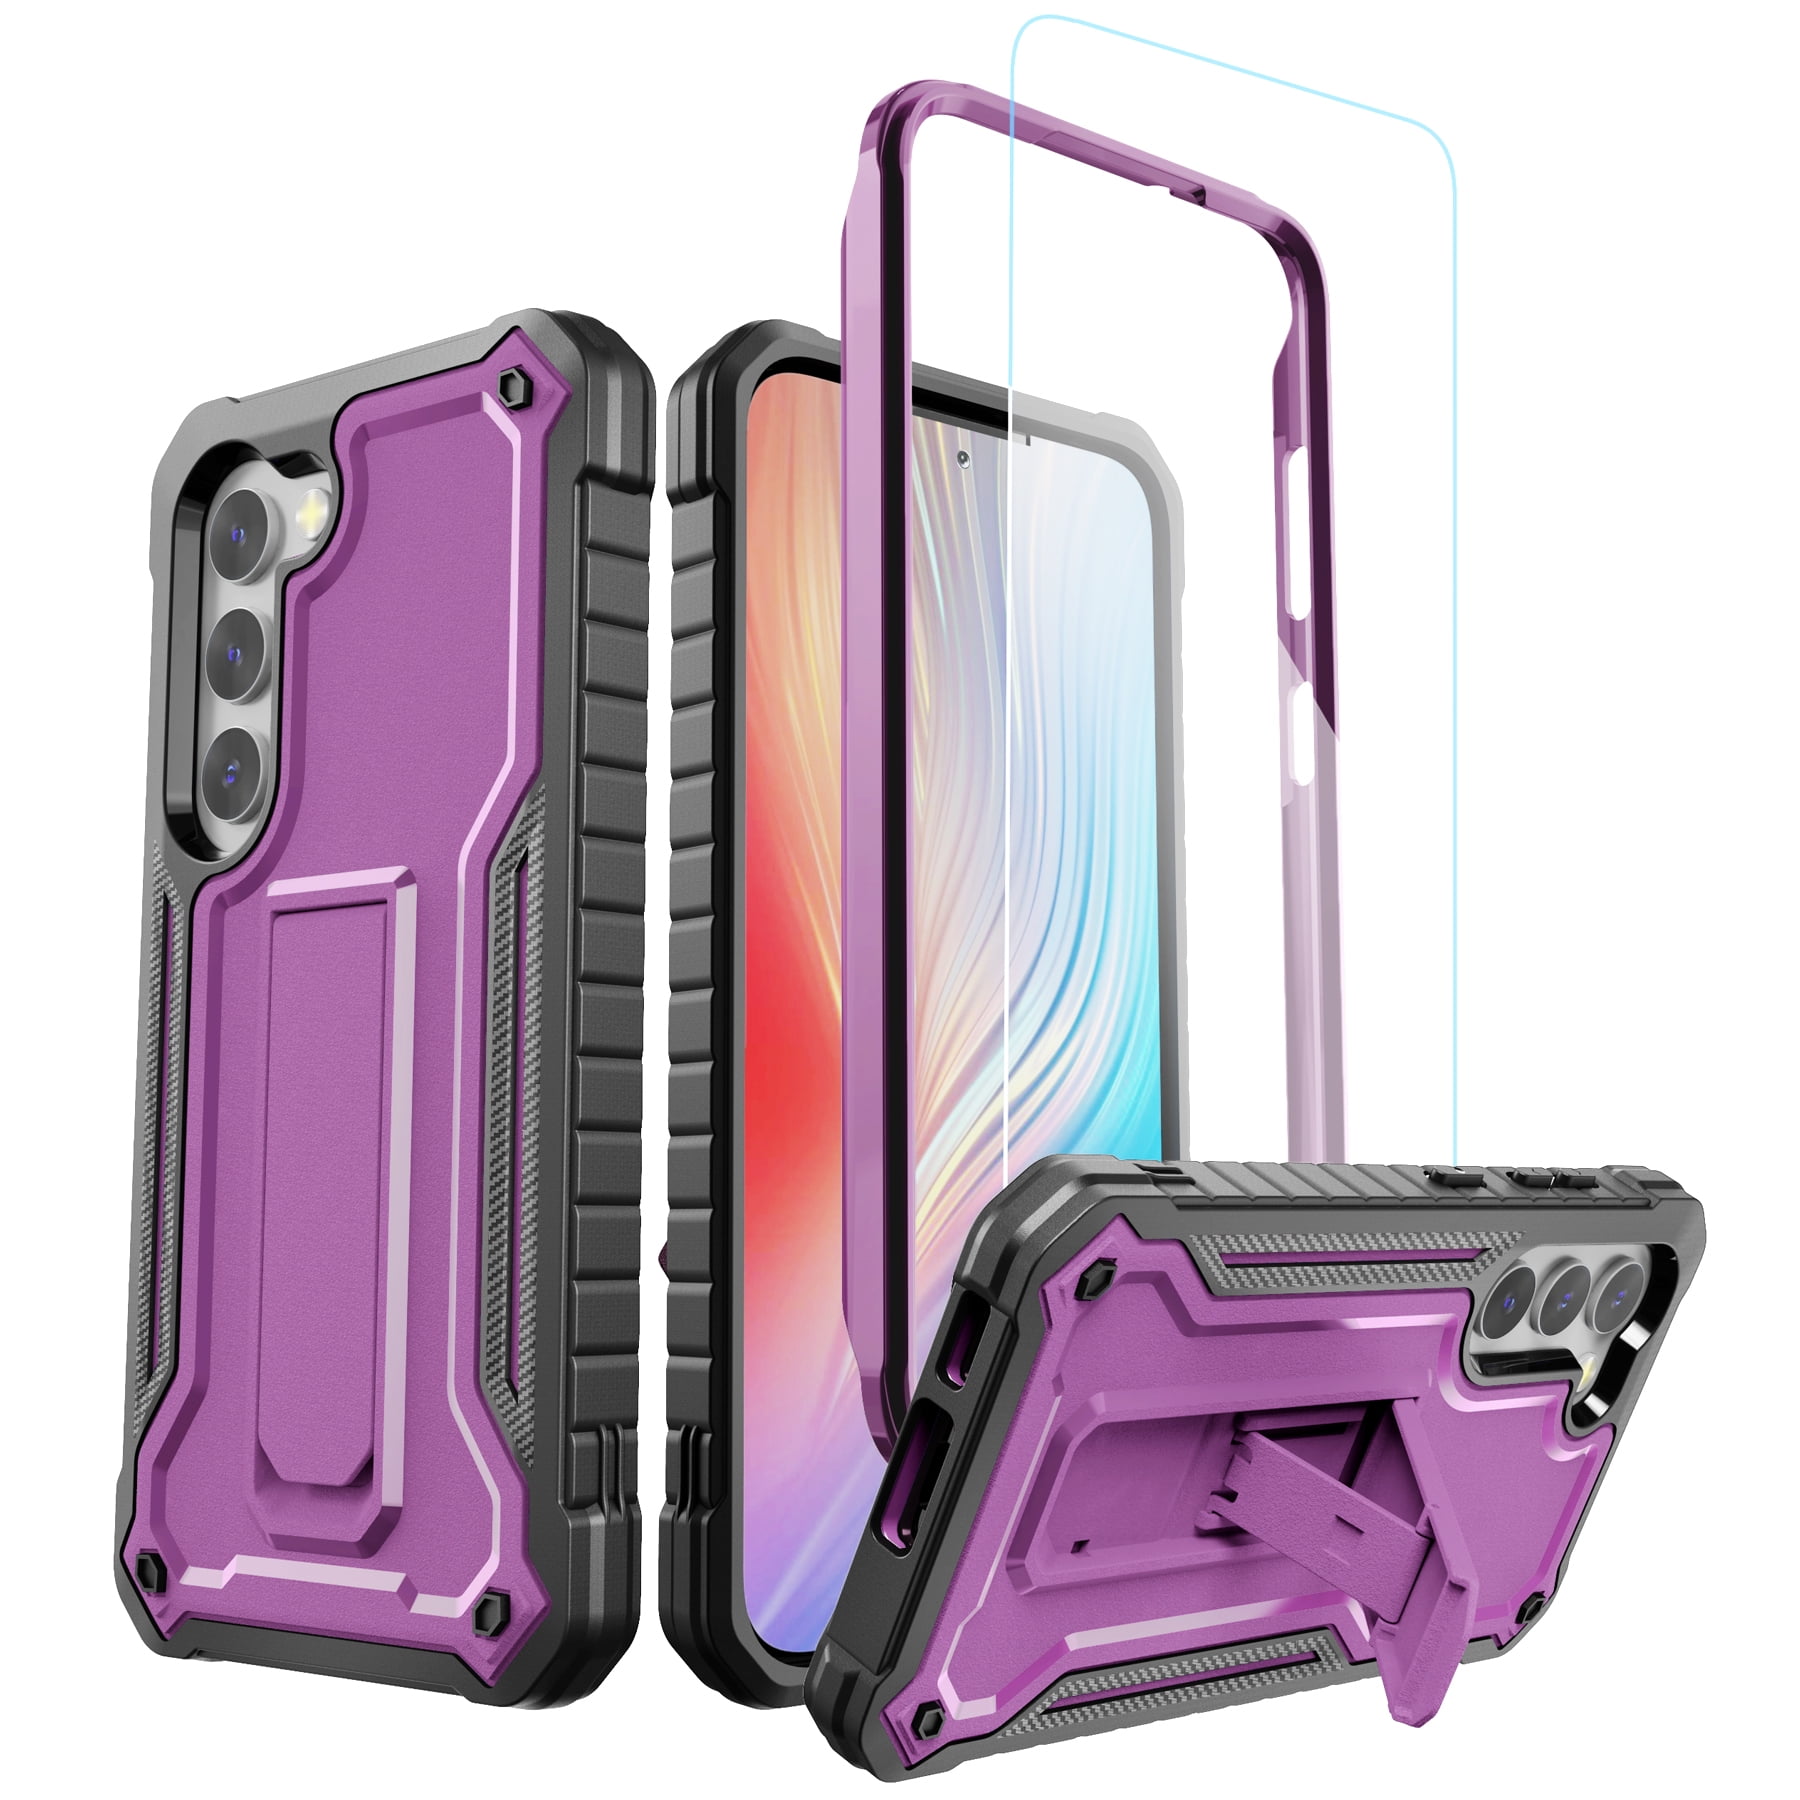 Case/Screen Protector for Galaxy S6, Tech21 Purple Evo Check [ANTI-SHOCK]  Cover + PureGear Tempered Glass Screen Guard for Samsung Galaxy S6 (SM-G920)